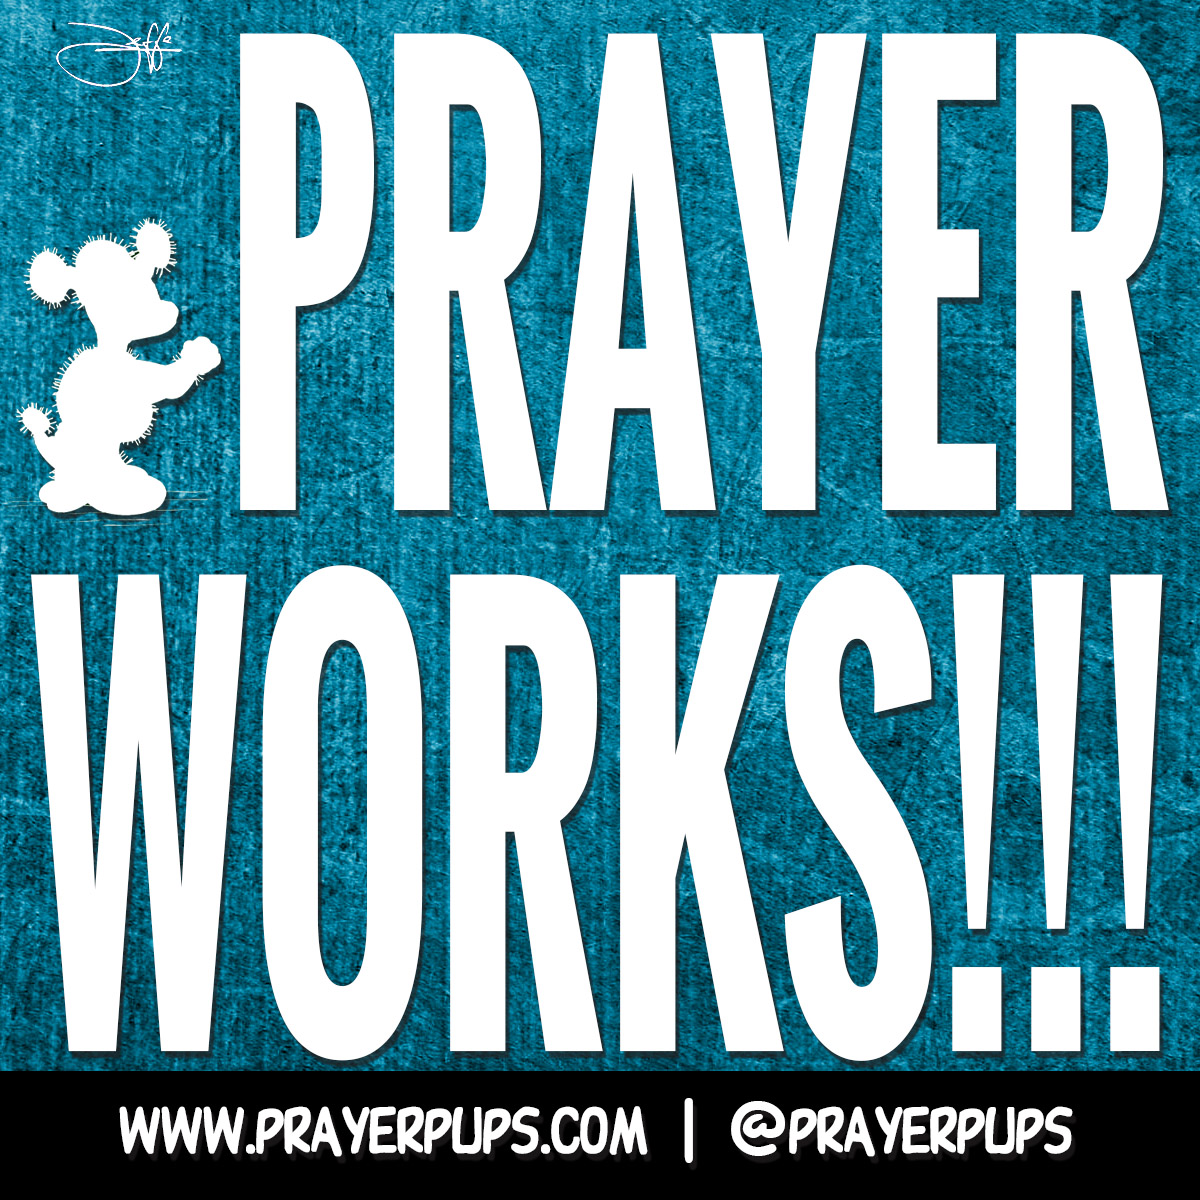 Prayer Works